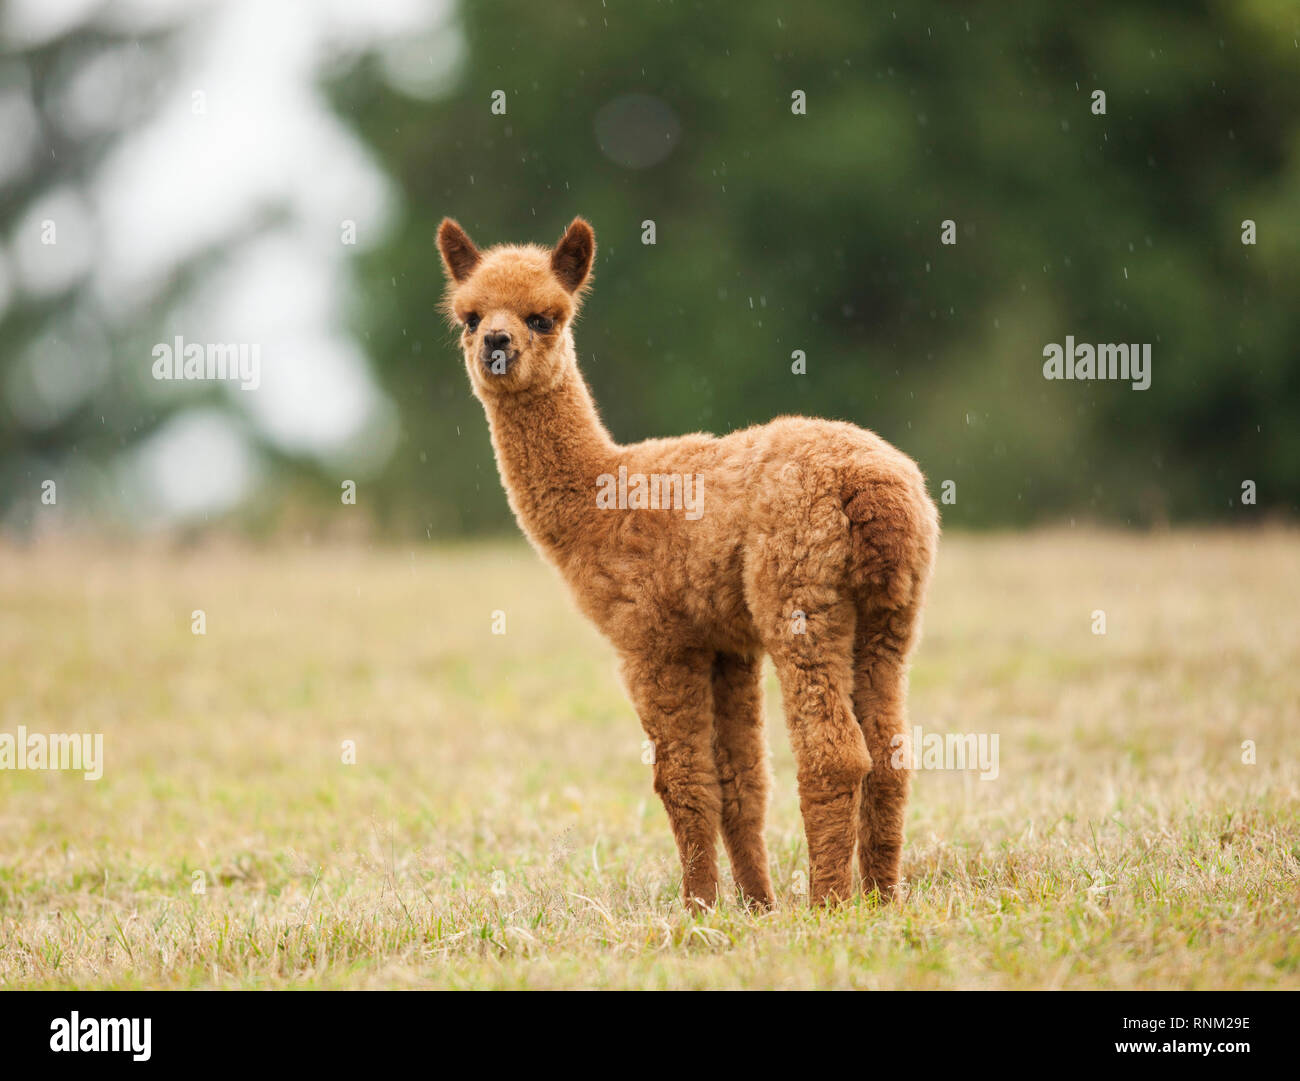 Alpaca (Vicugna pacos). Cria standing on a meadow. Germany Stock Photo